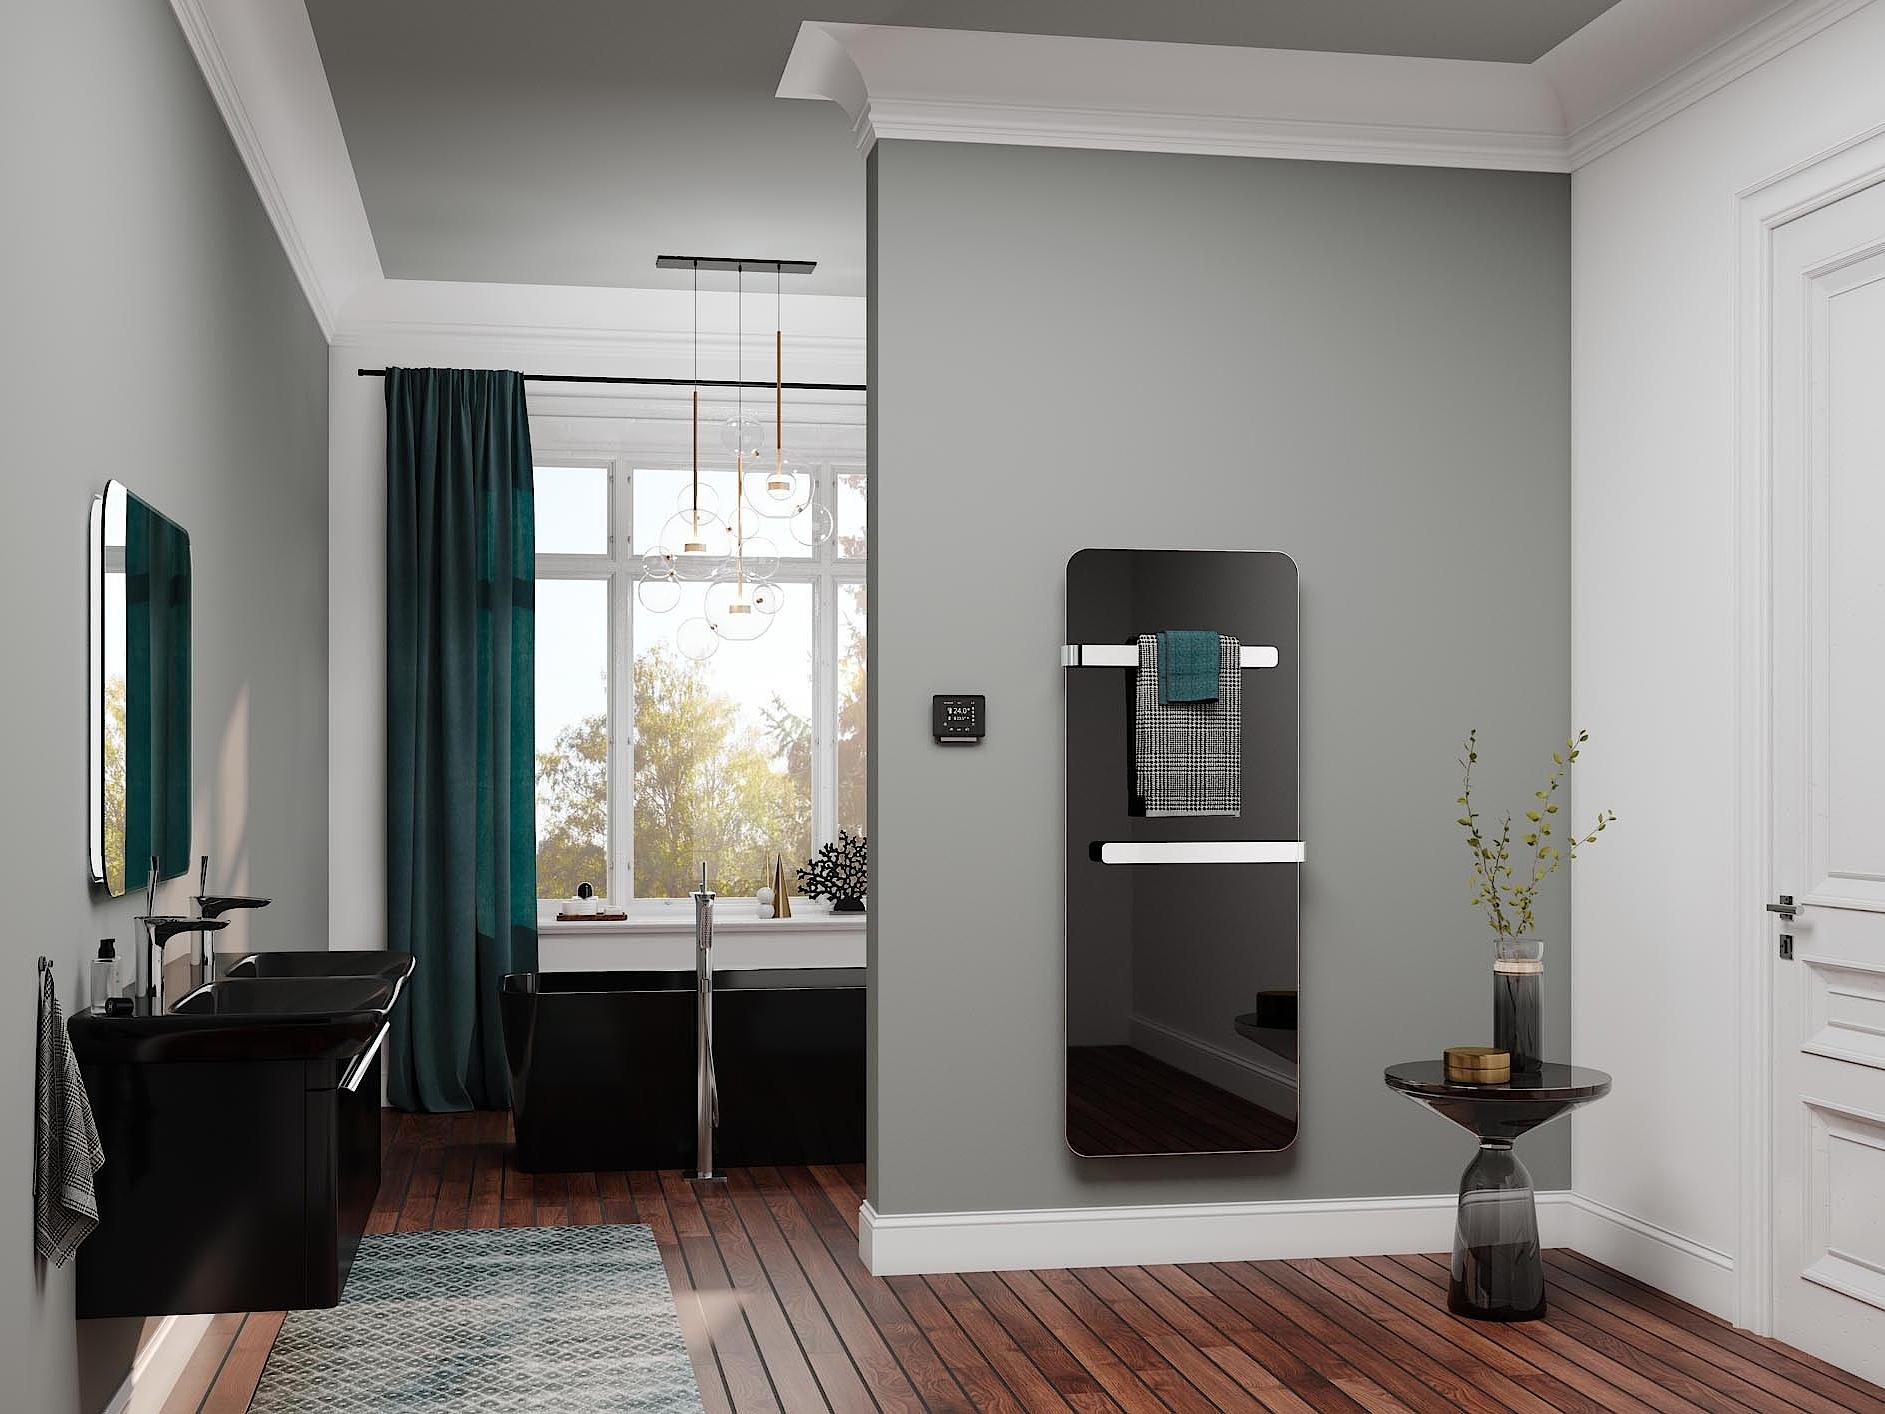 Kermi Elveo designer and bathroom radiators – state-of-the-art design. Heat via infrared.